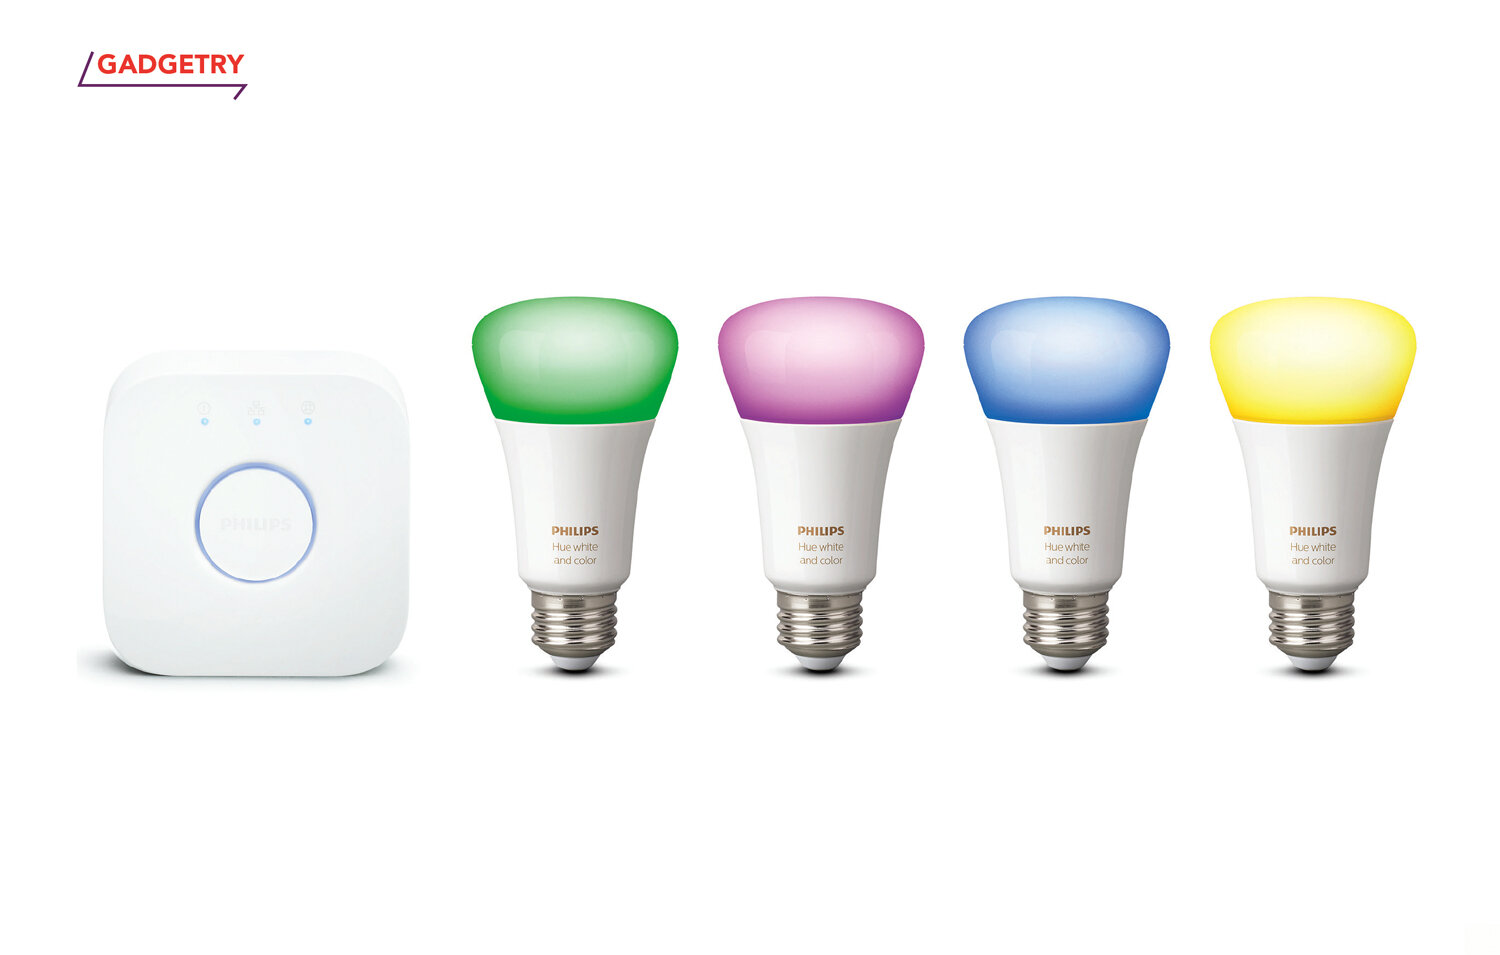 Philips Smart Lighting for the Modern Home — Ornelas Designs